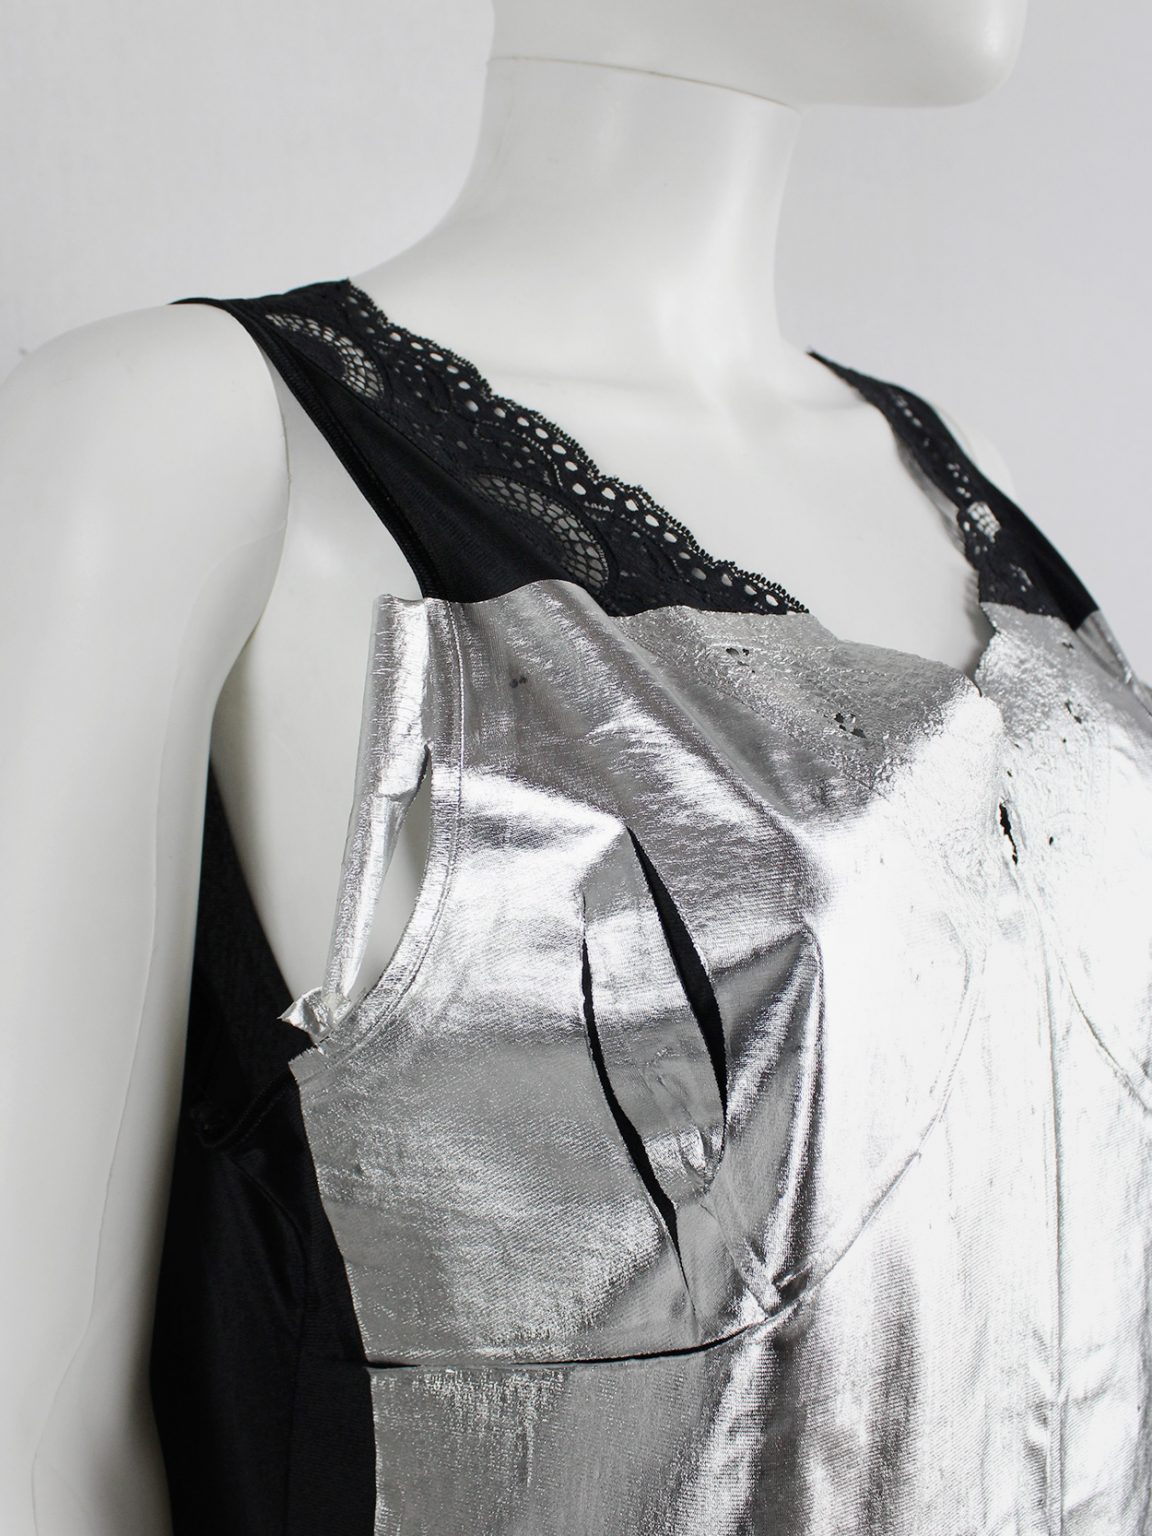 Maison Martin Margiela artisanal black lace dress with pressed silver foil — spring 2003